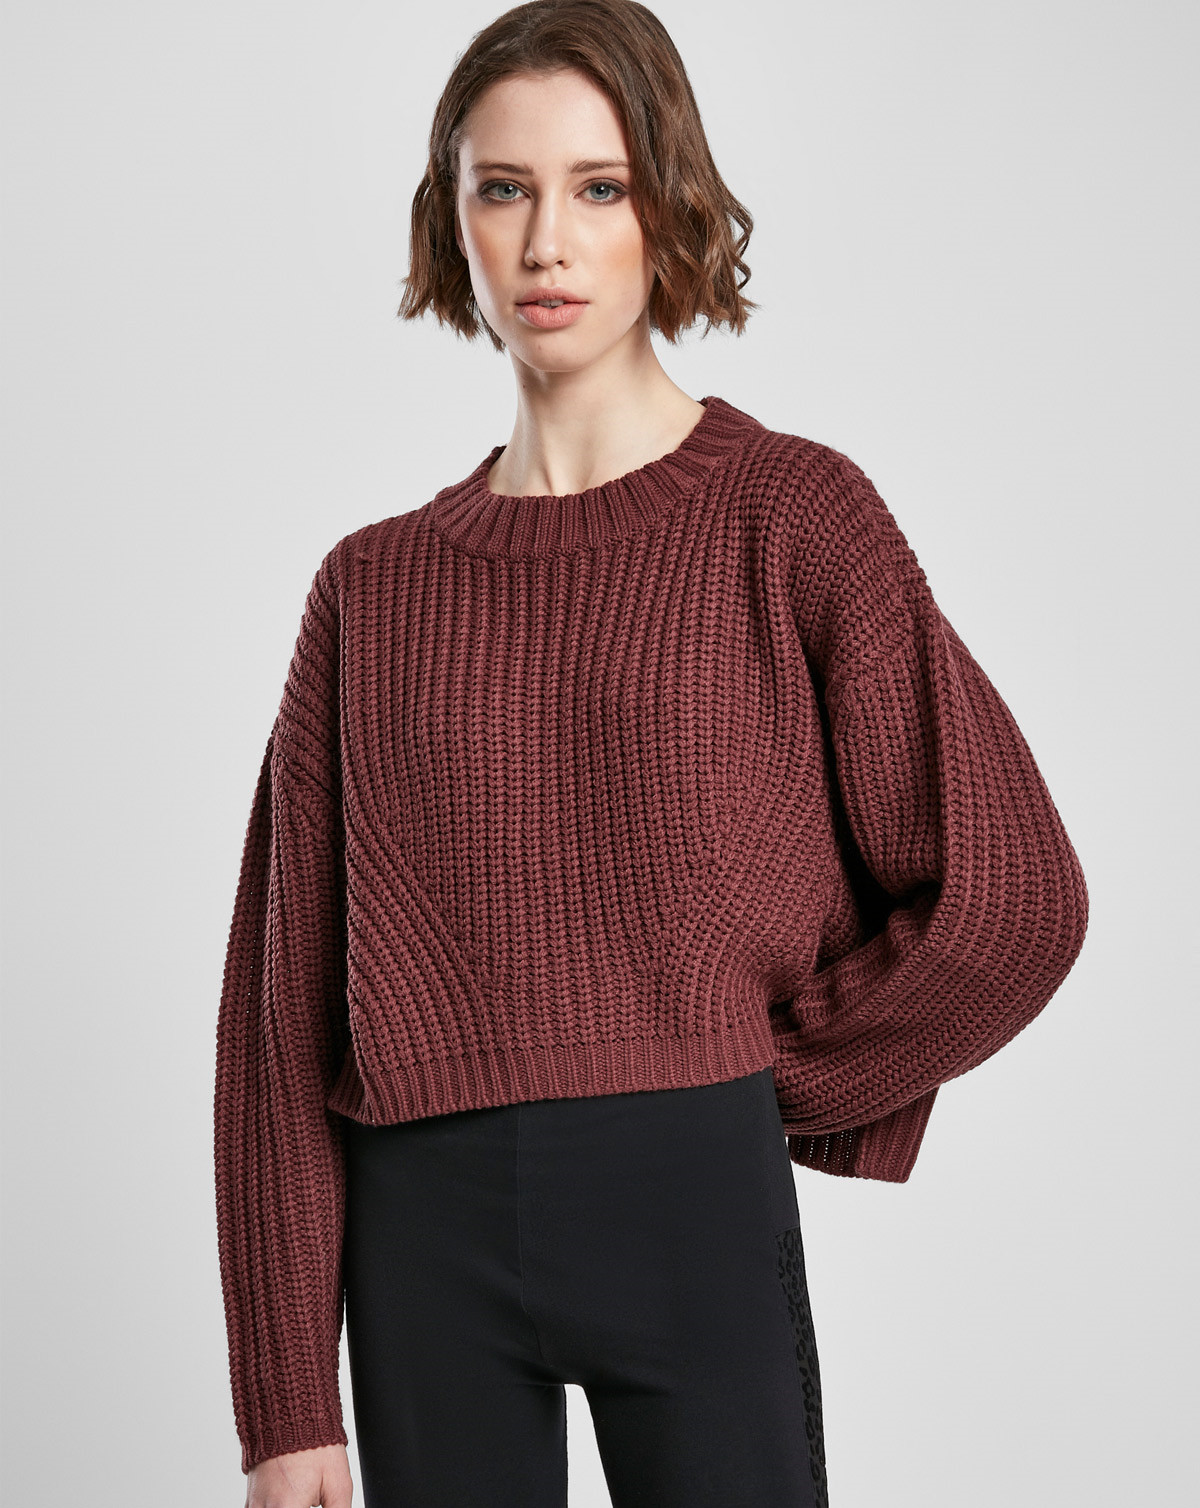 #2 - Urban Classics Ladies Wide Oversize Sweater (Cherry, S)